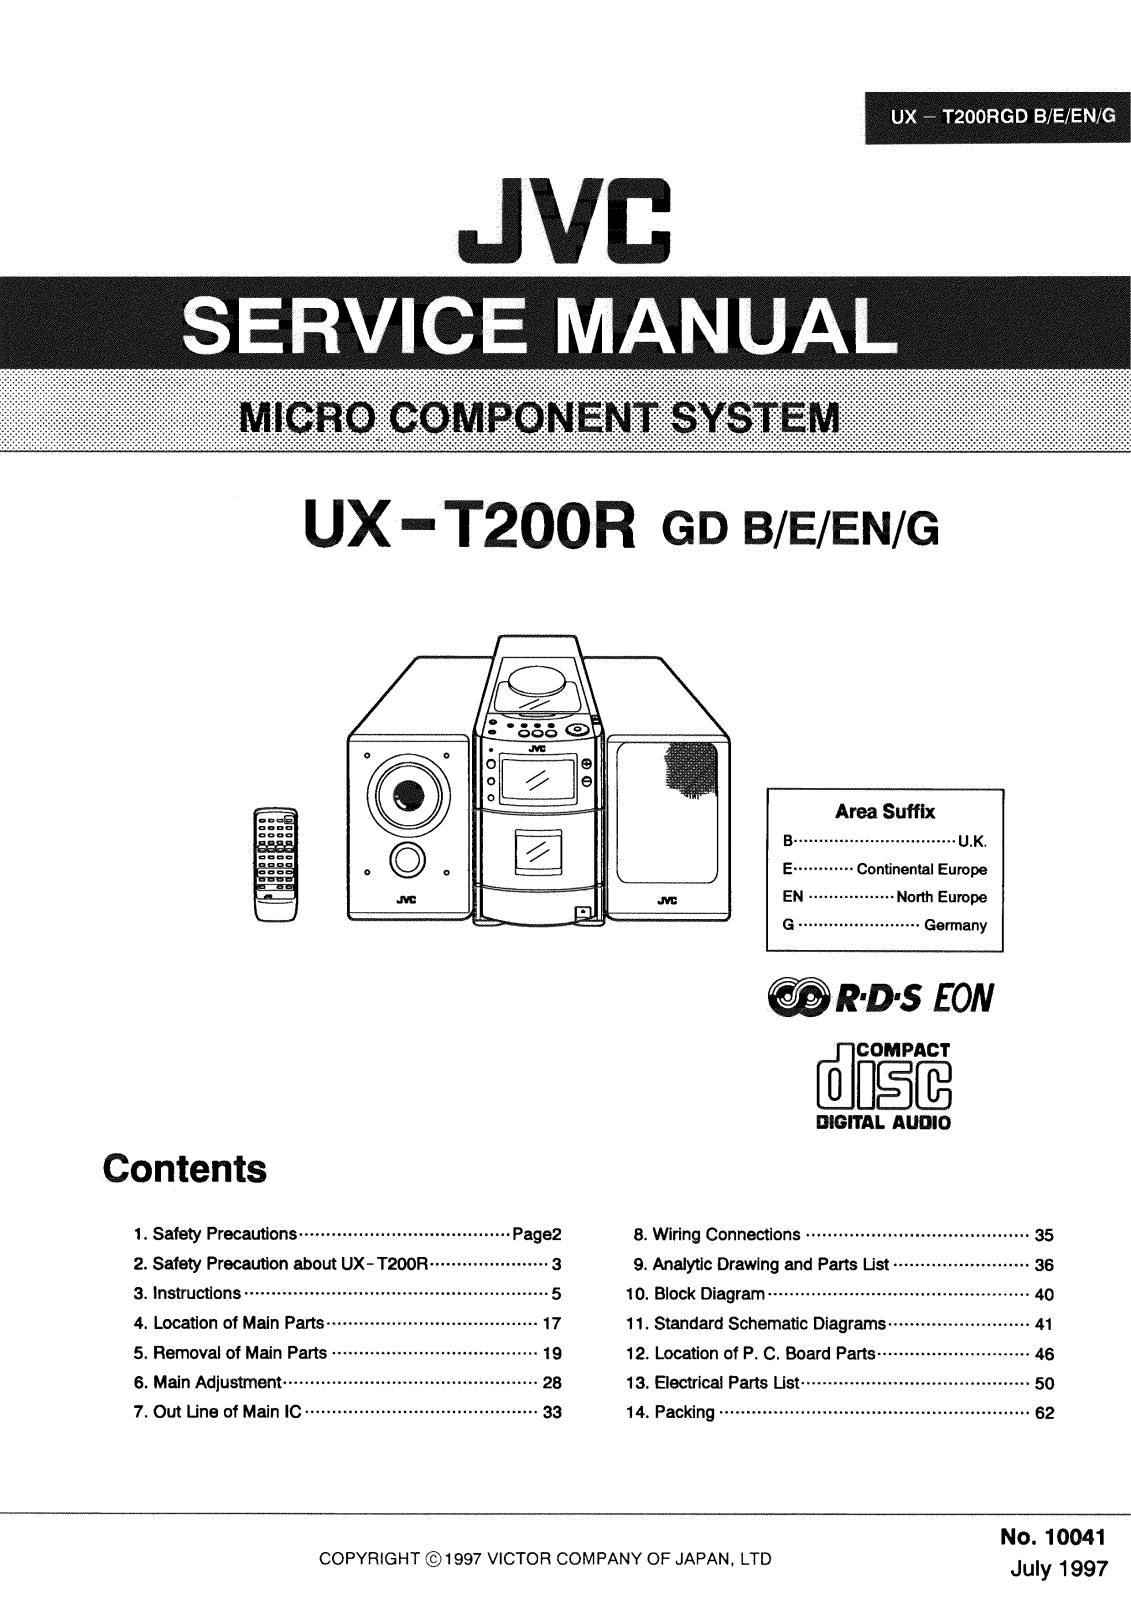 JVC UXT-200-R Service manual